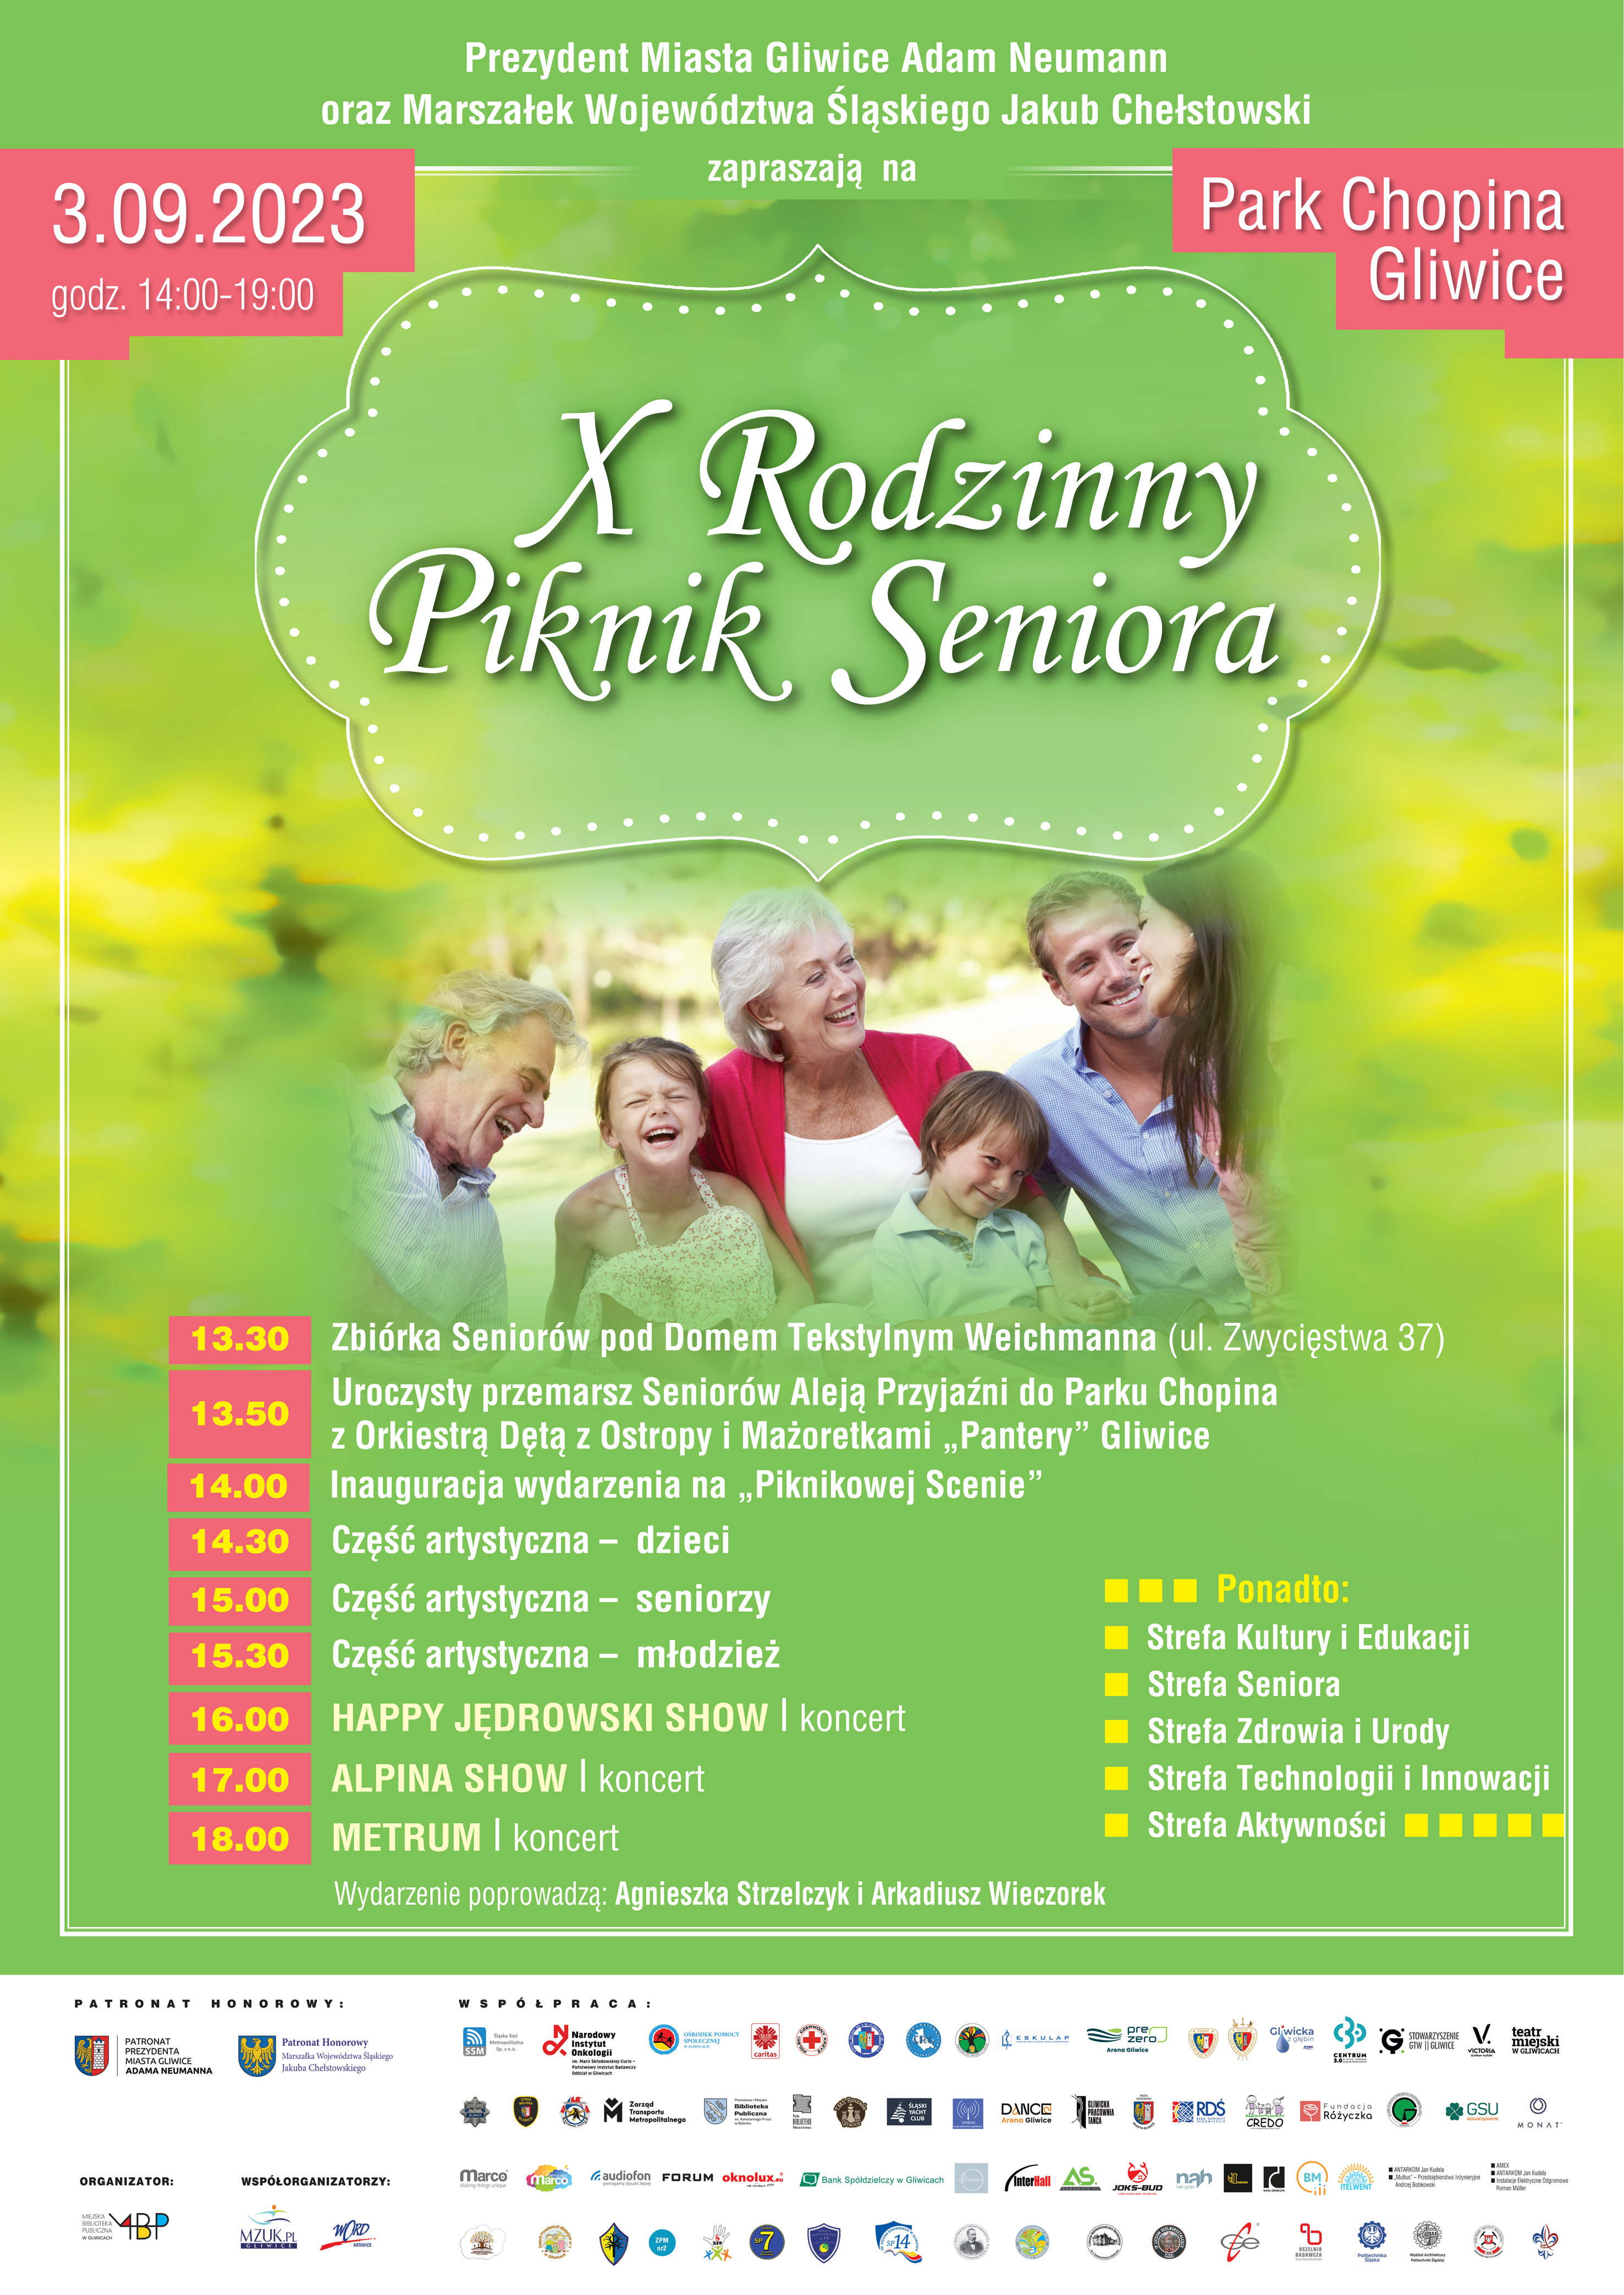 Plakat promujący Piknik Seniora